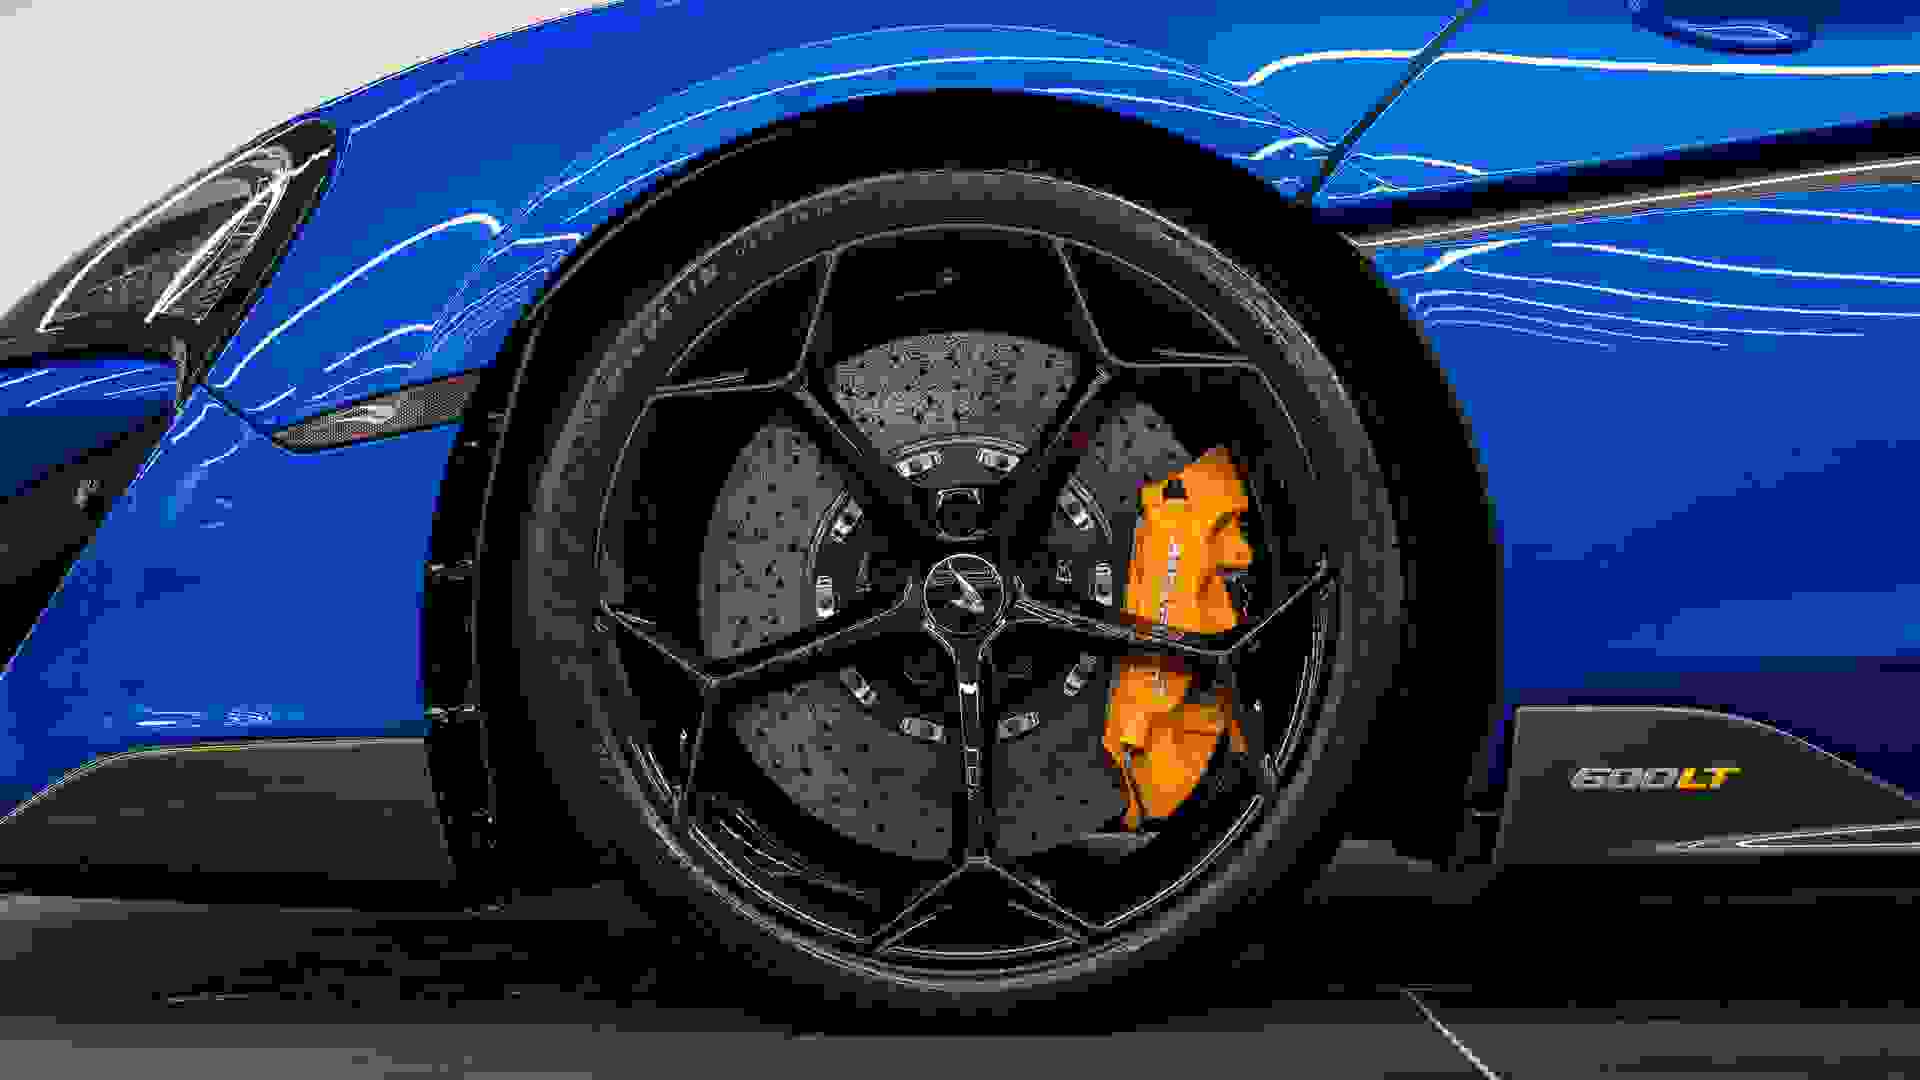 McLaren 600LT Photo ec72abec-bbcf-4baa-9d16-57925db516cd.jpg